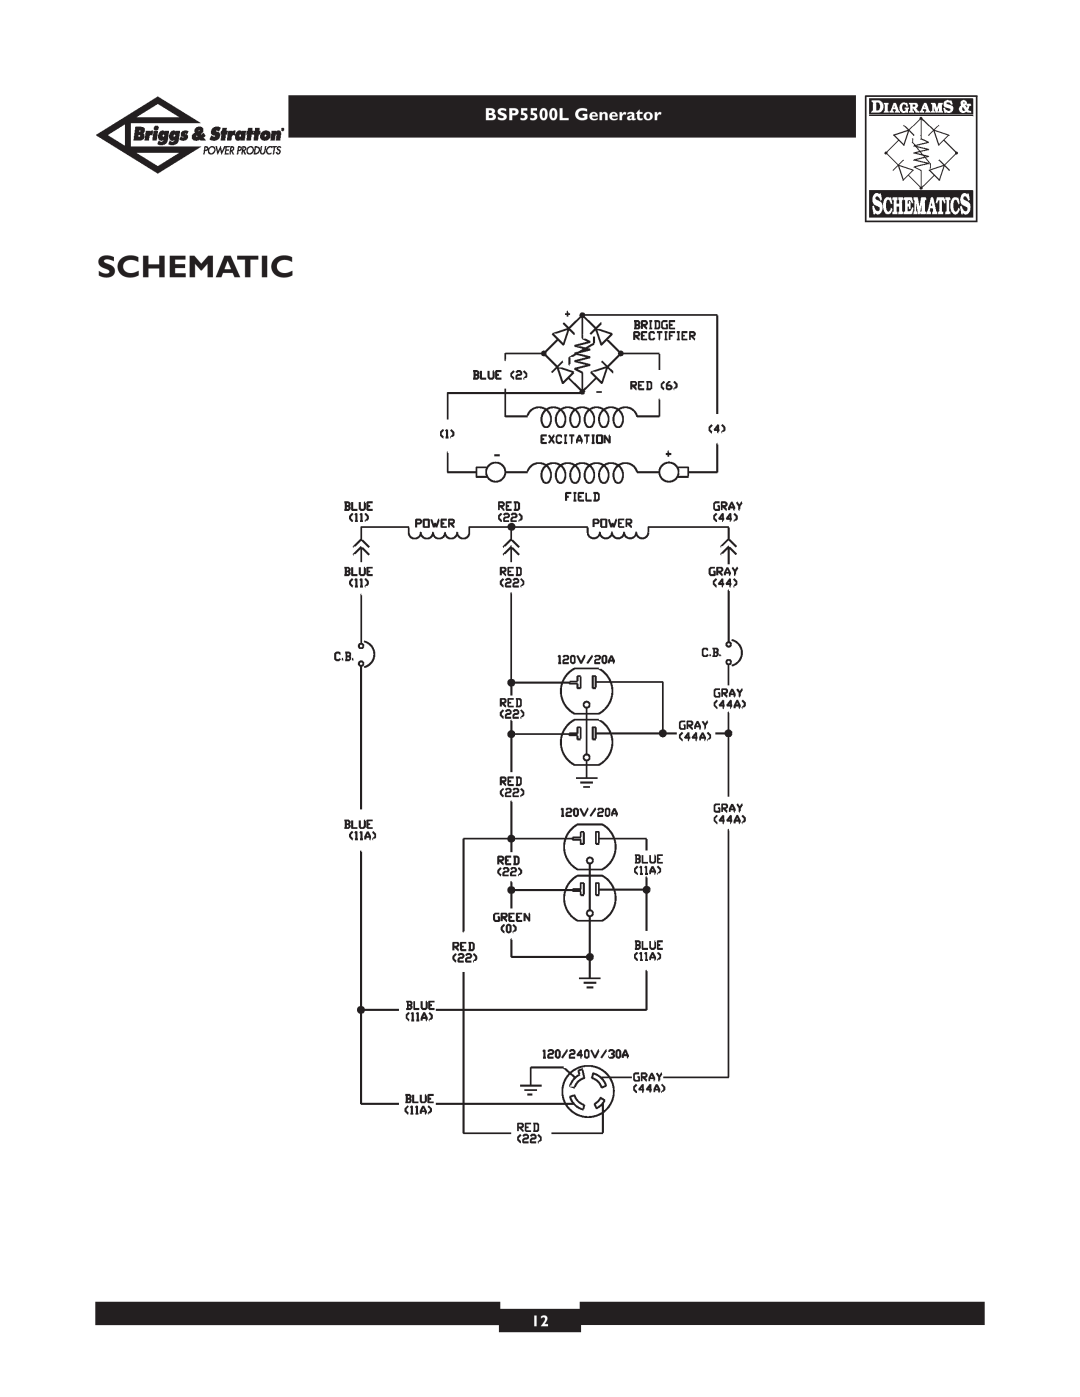 Briggs & Stratton bsp5500l owner manual Schematic, BSP5500L Generator 